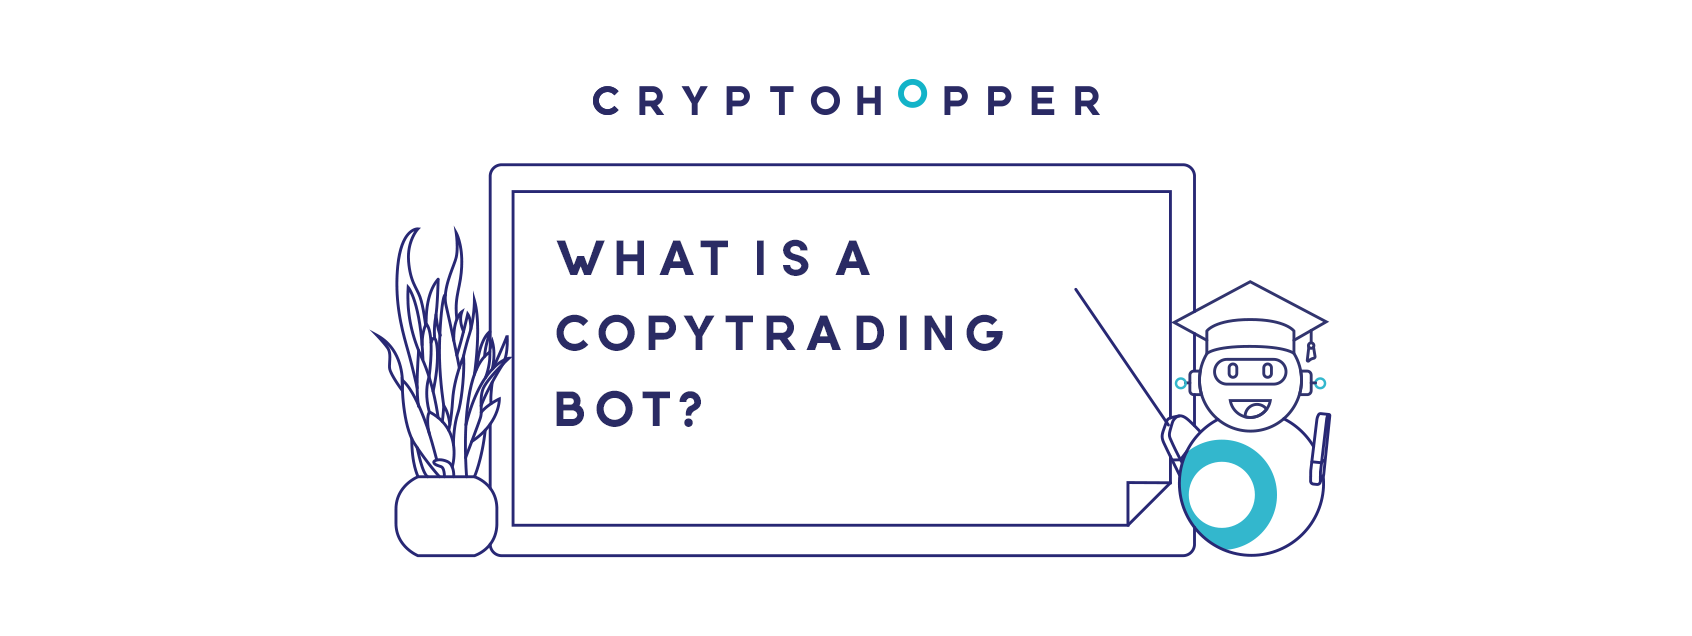 CryptoHopper copy trading